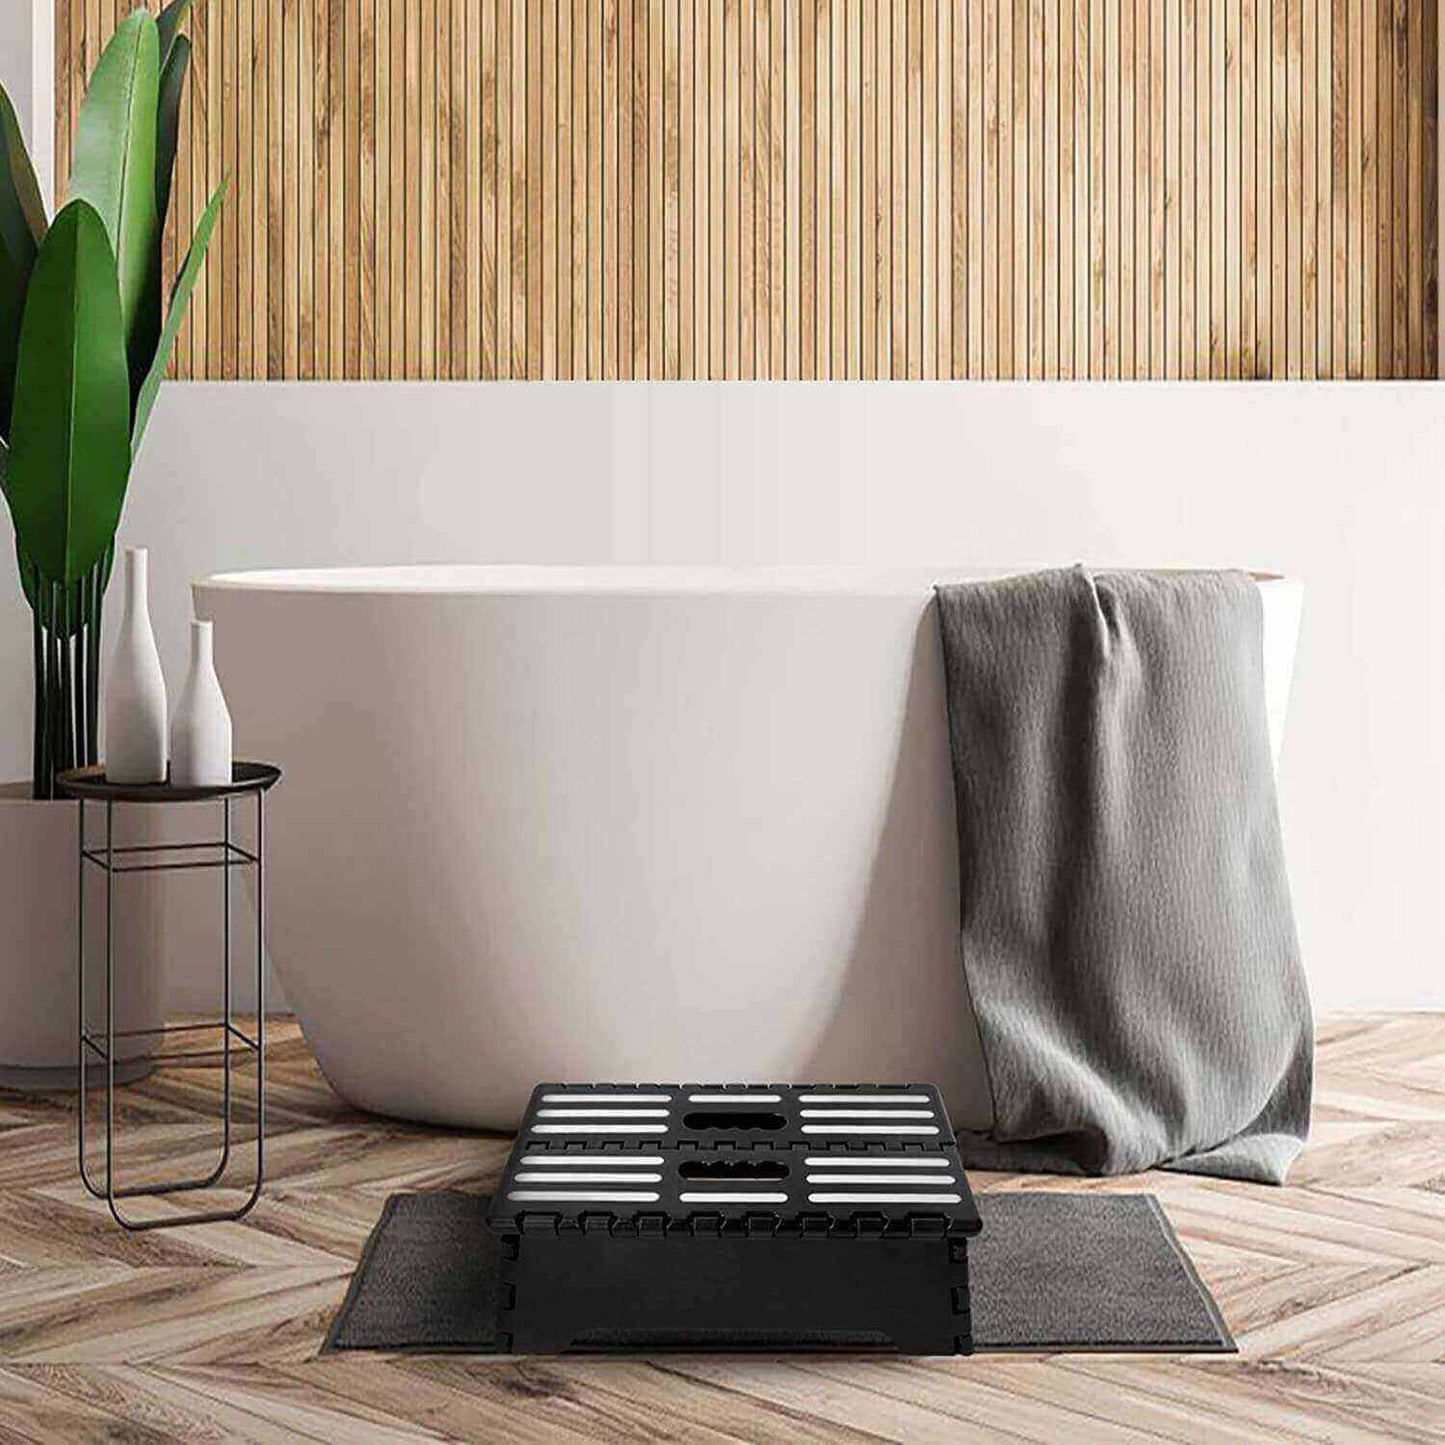 Lightweight plastic folding step stool in black, item beside a bathtub